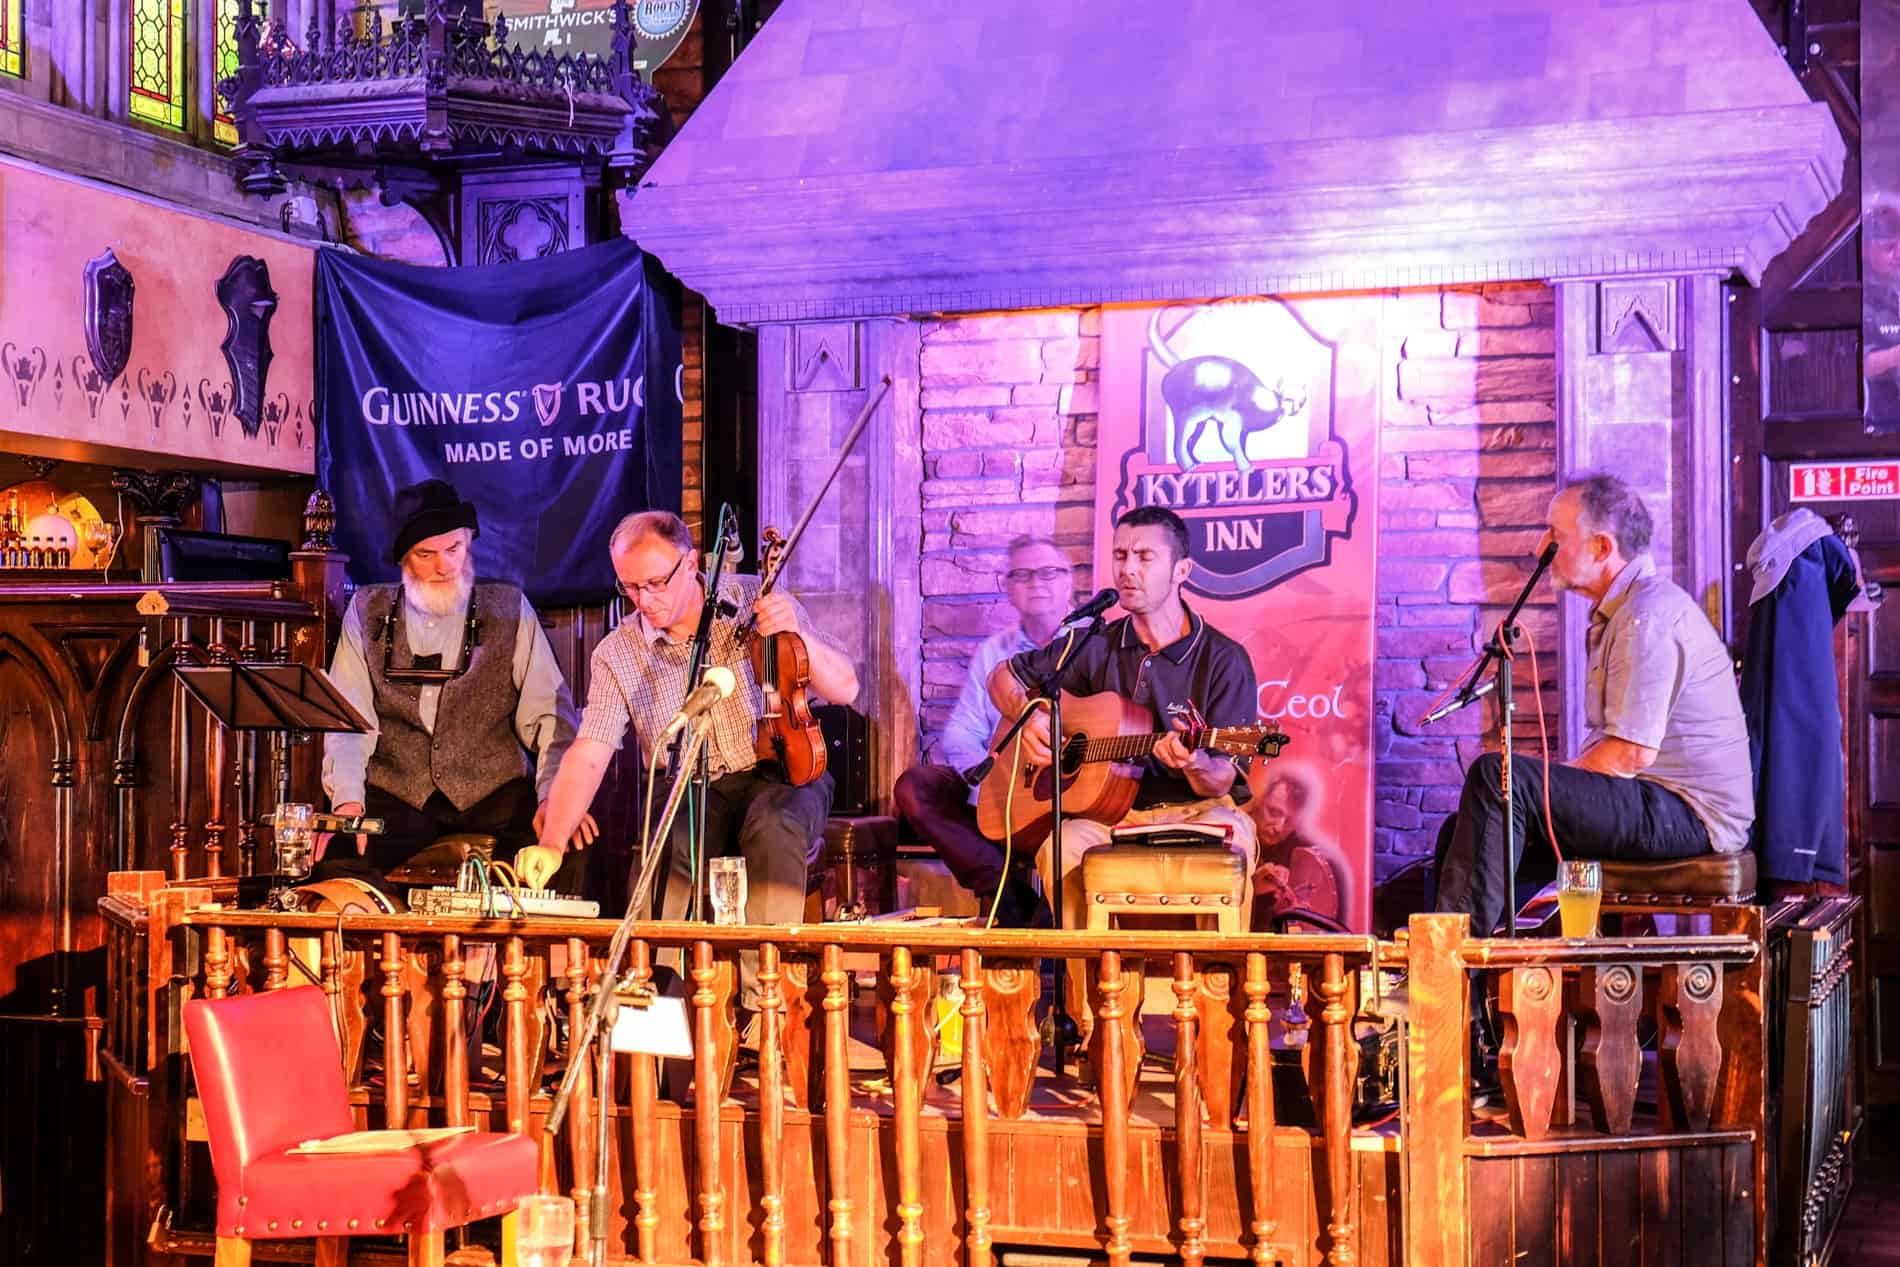 An Irish Band play on stage at the Kyteler's Inn, Kilkenny, Ireland